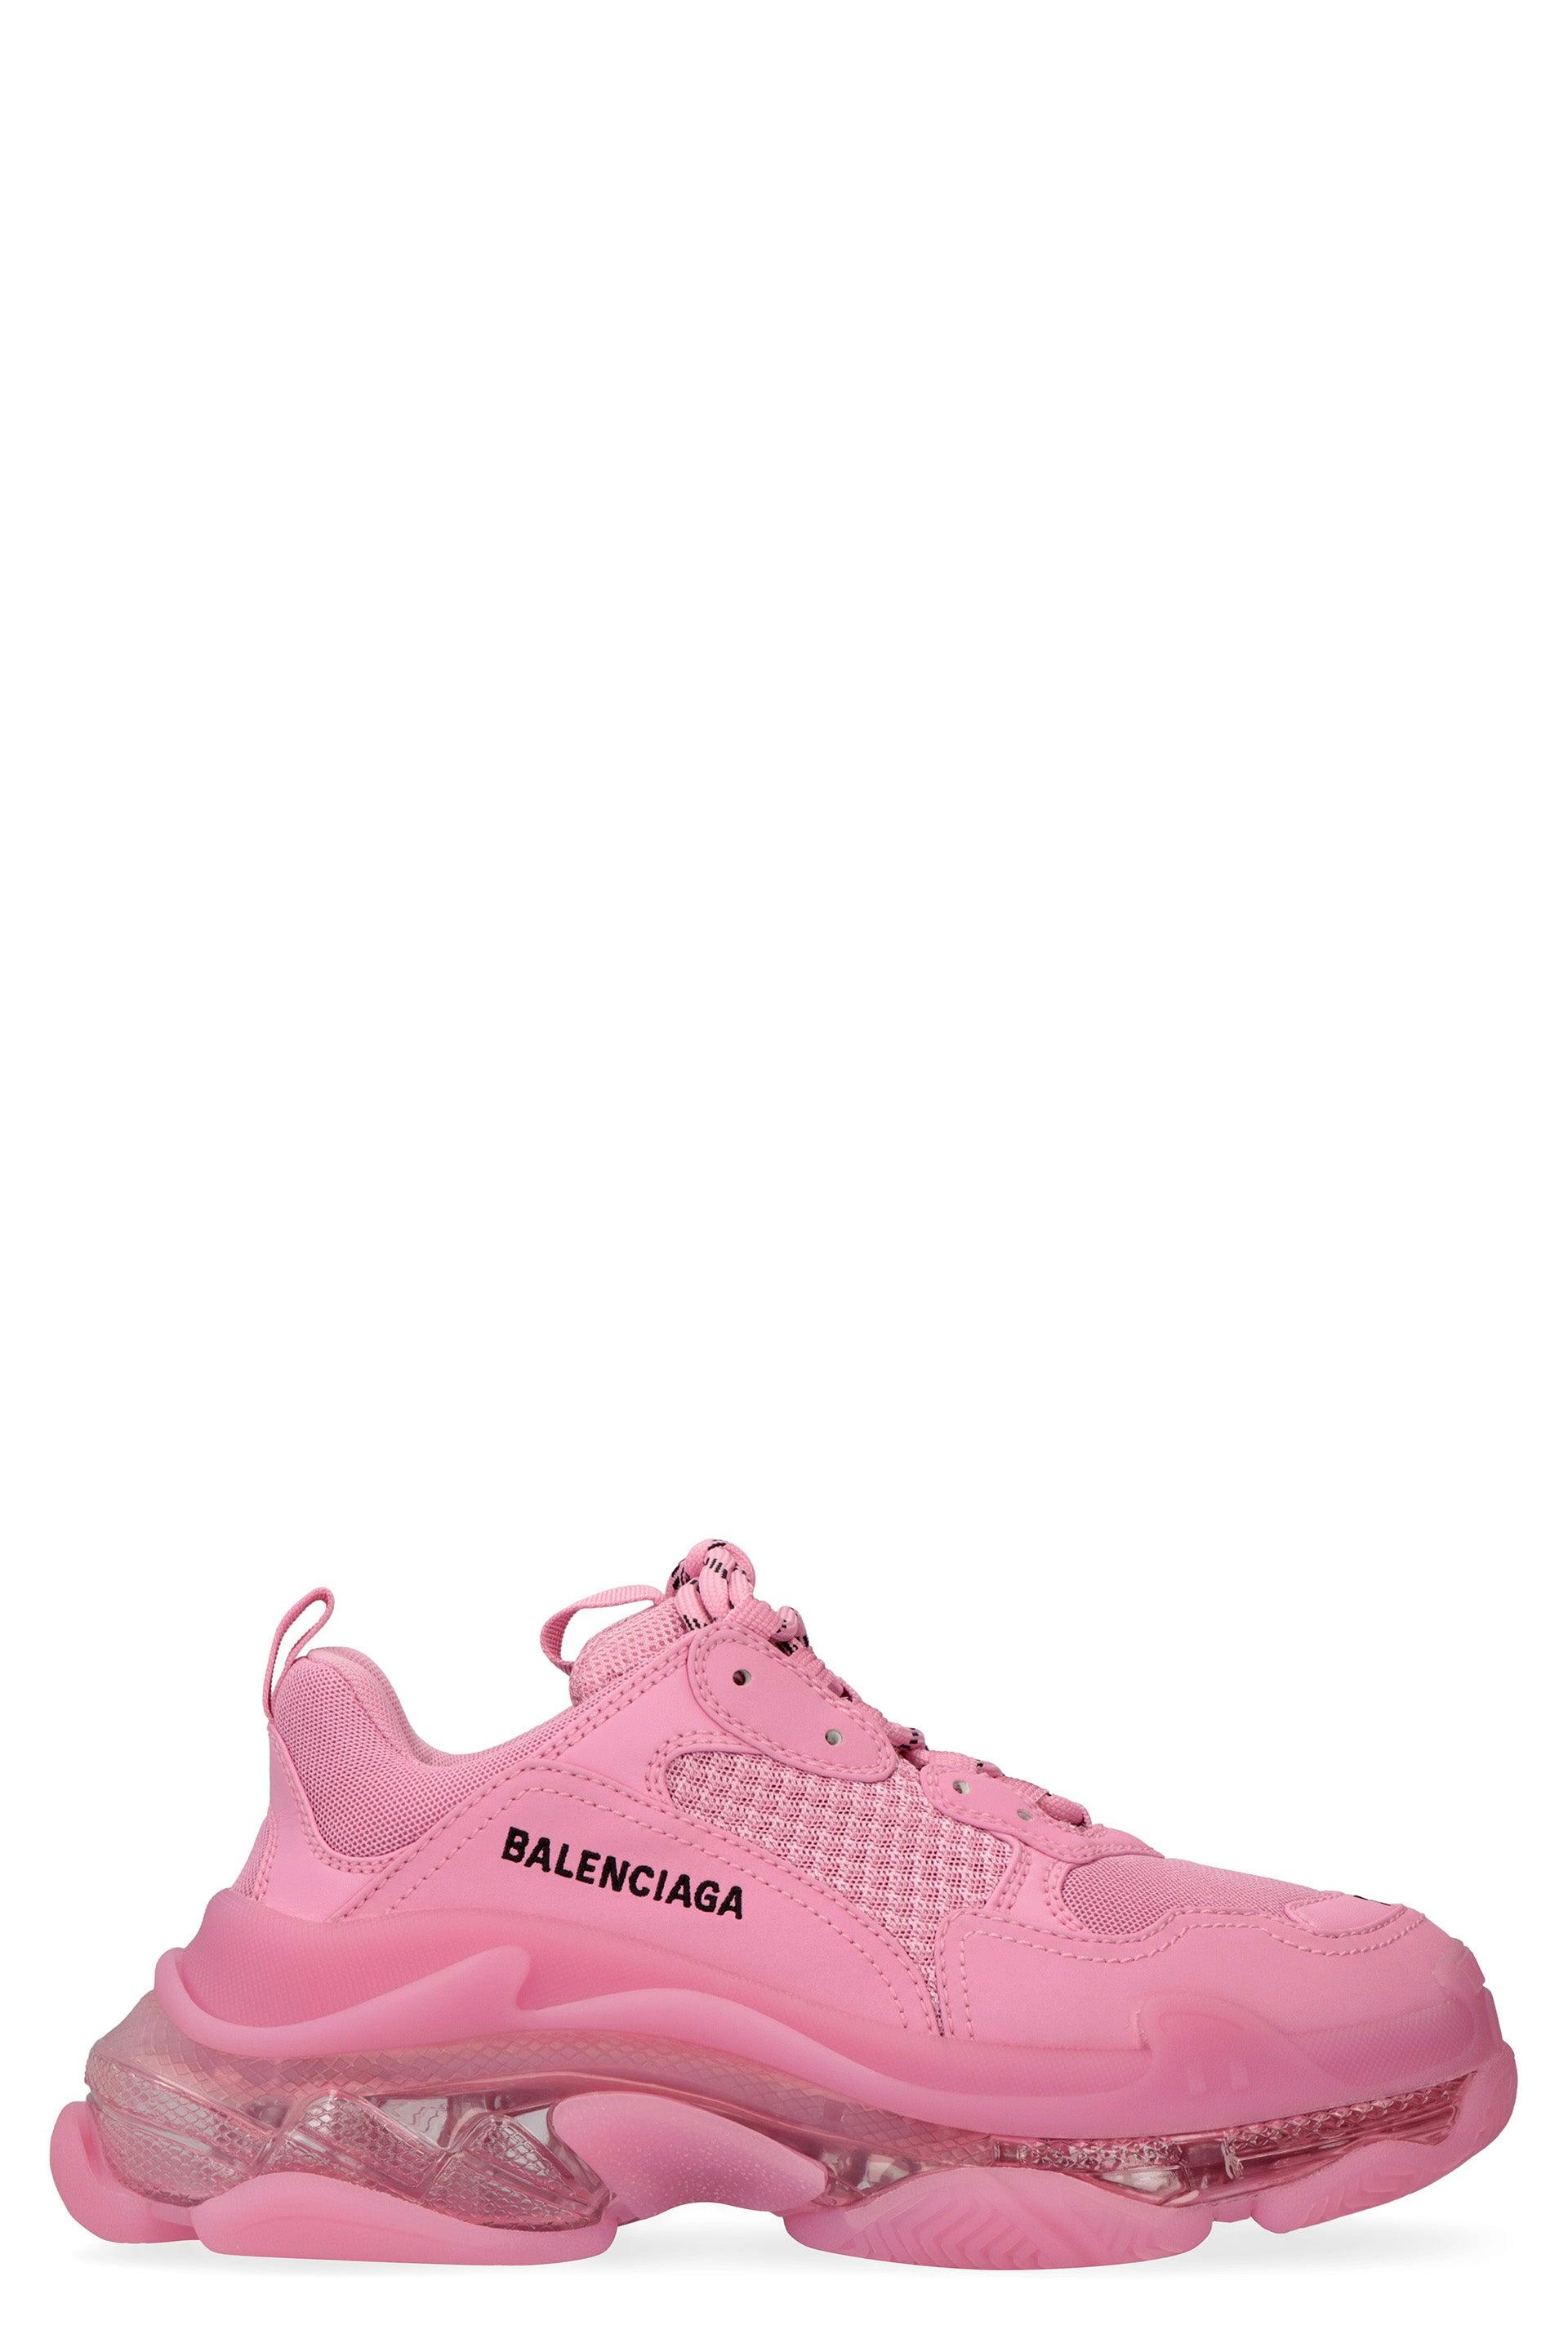 Balenciaga Triple S Sneakers in Pink | Lyst